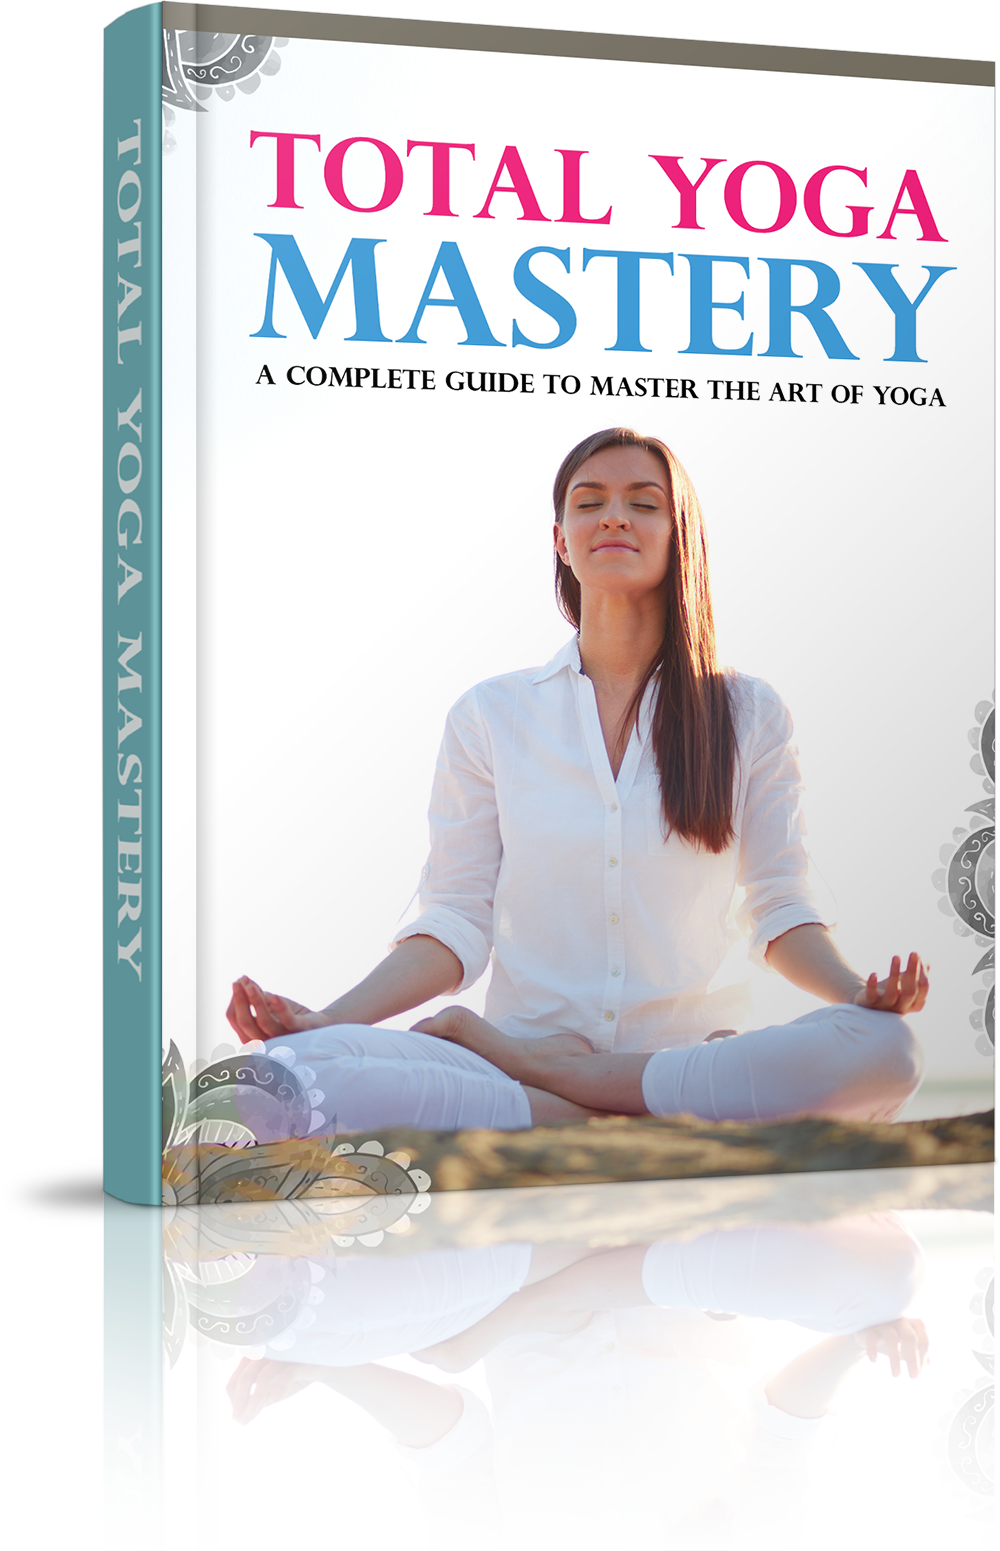 Total Yoga Mastery